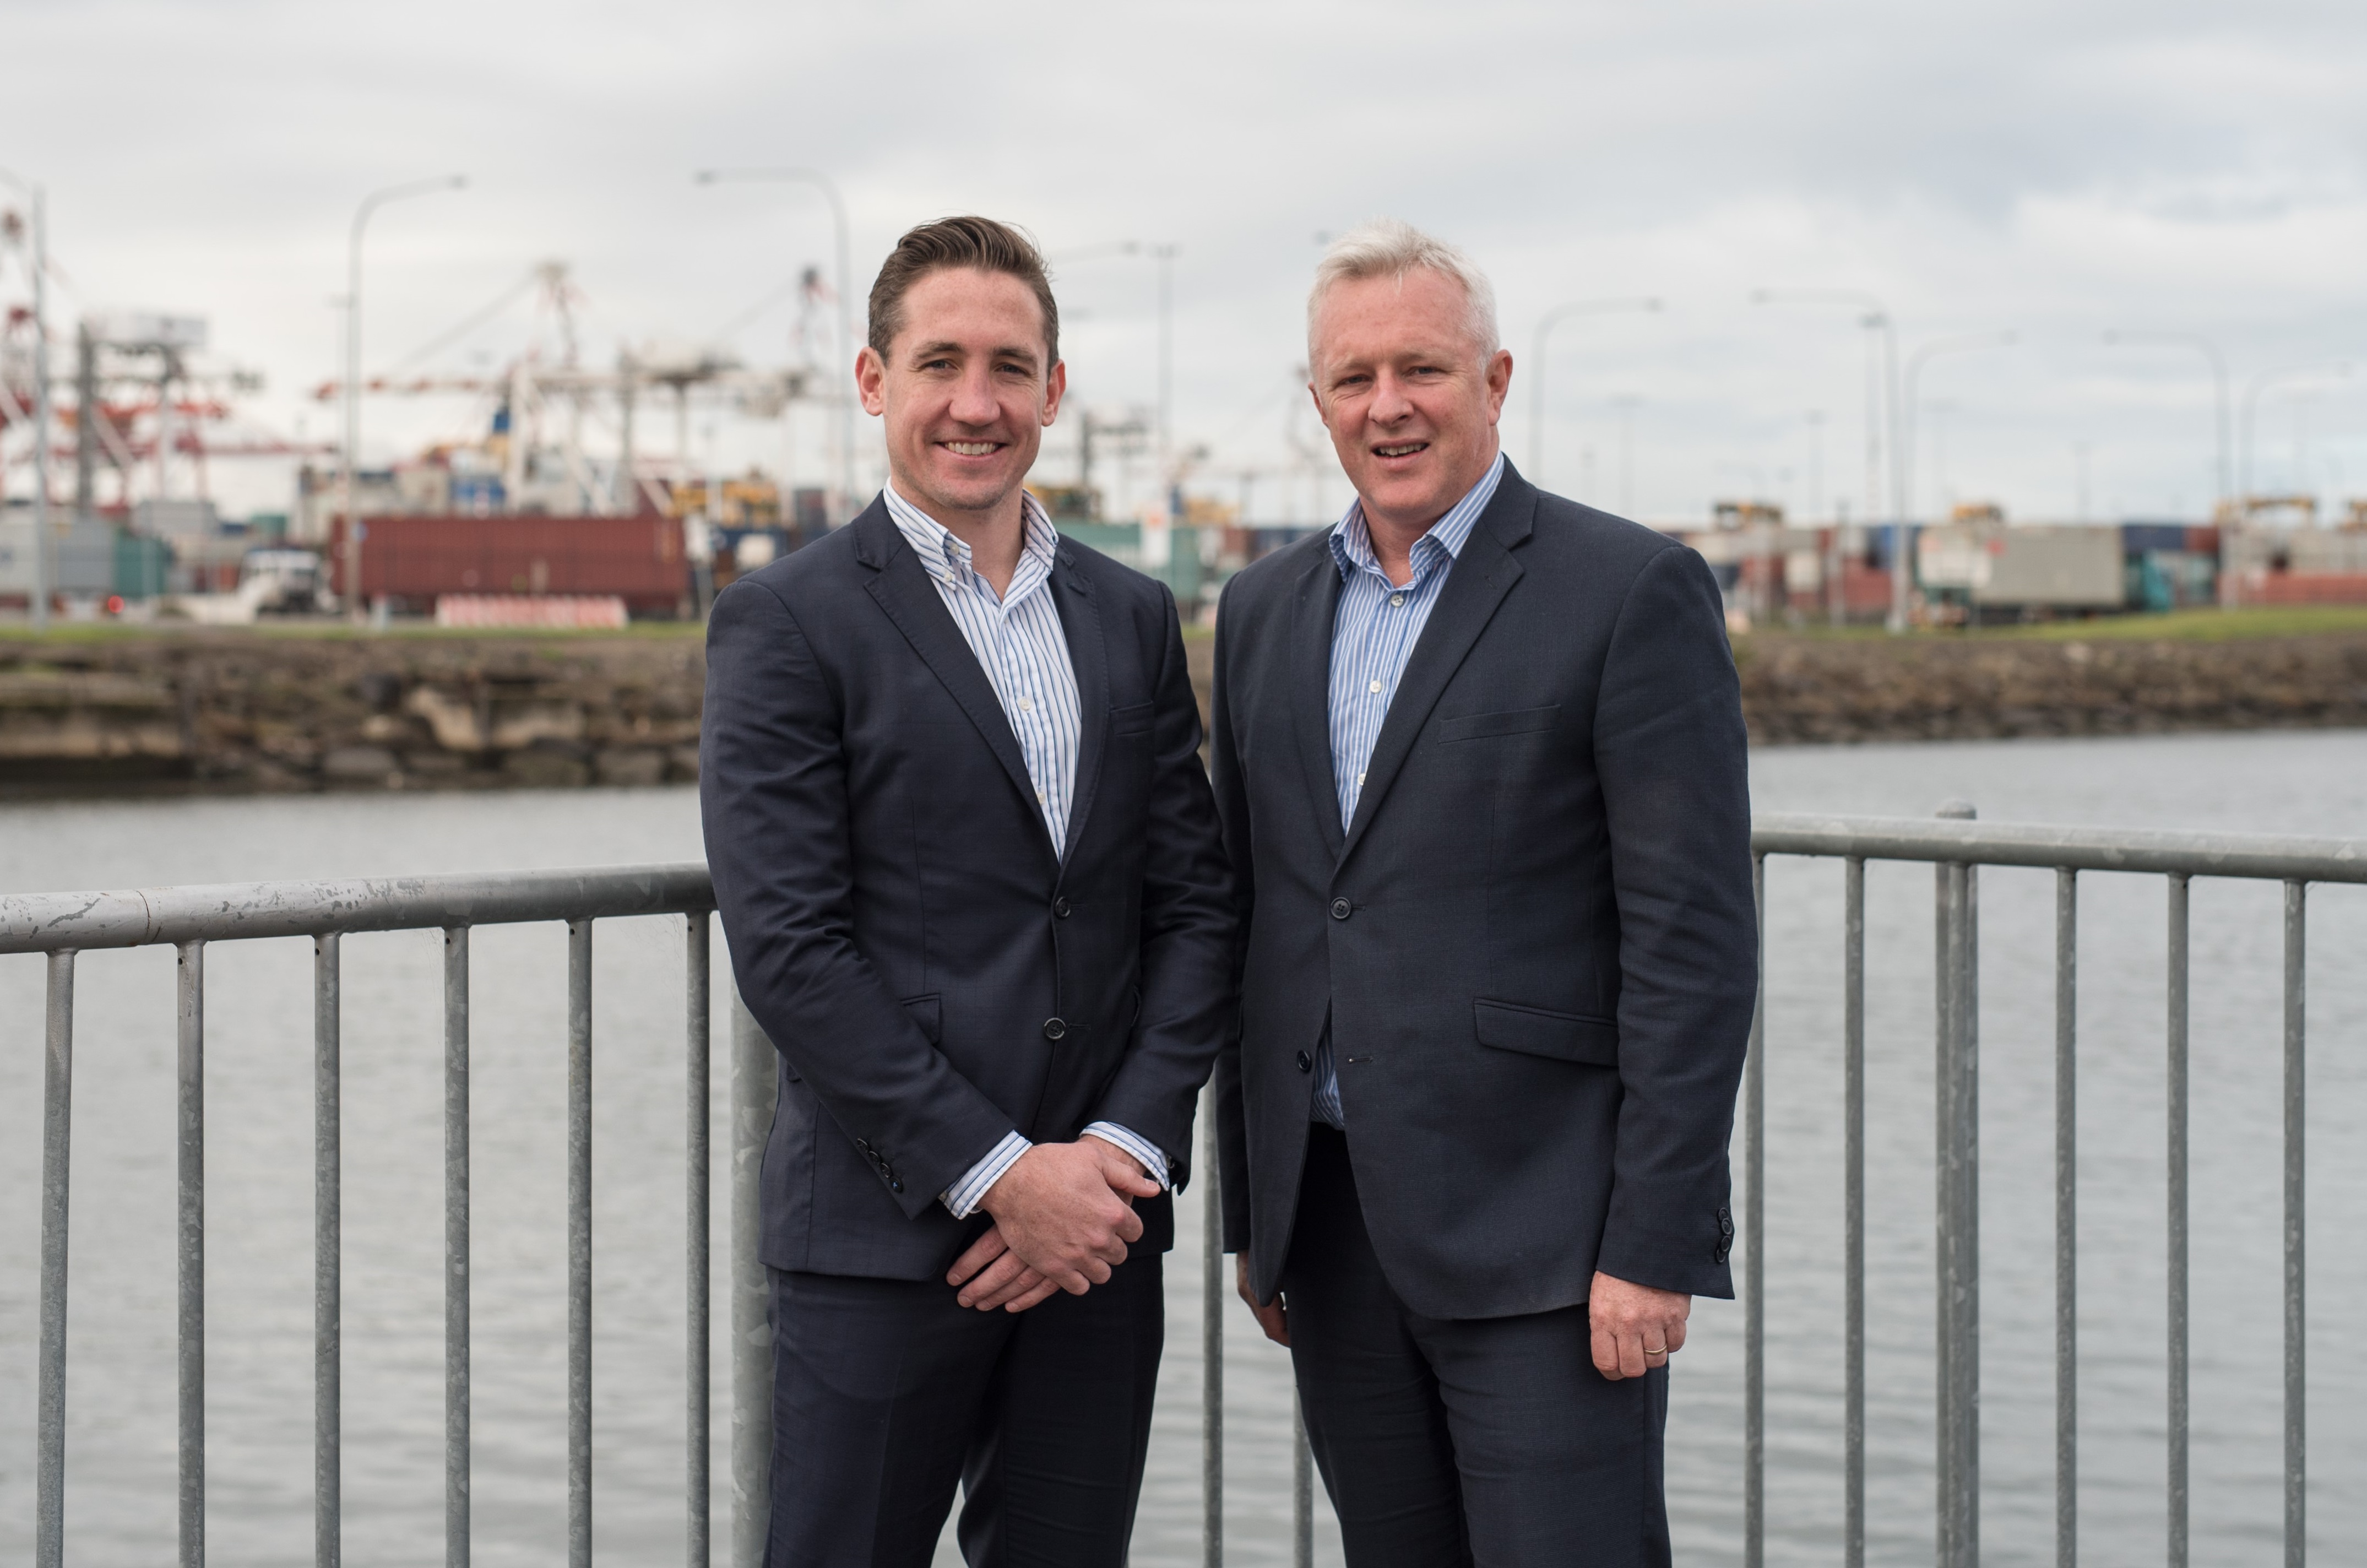 George Garth, Pro Kinetics General Manager and David Ross, Kotahi Chief Executive form strategic partnership to strengthen Australian businesses and trans-Tasman trade.